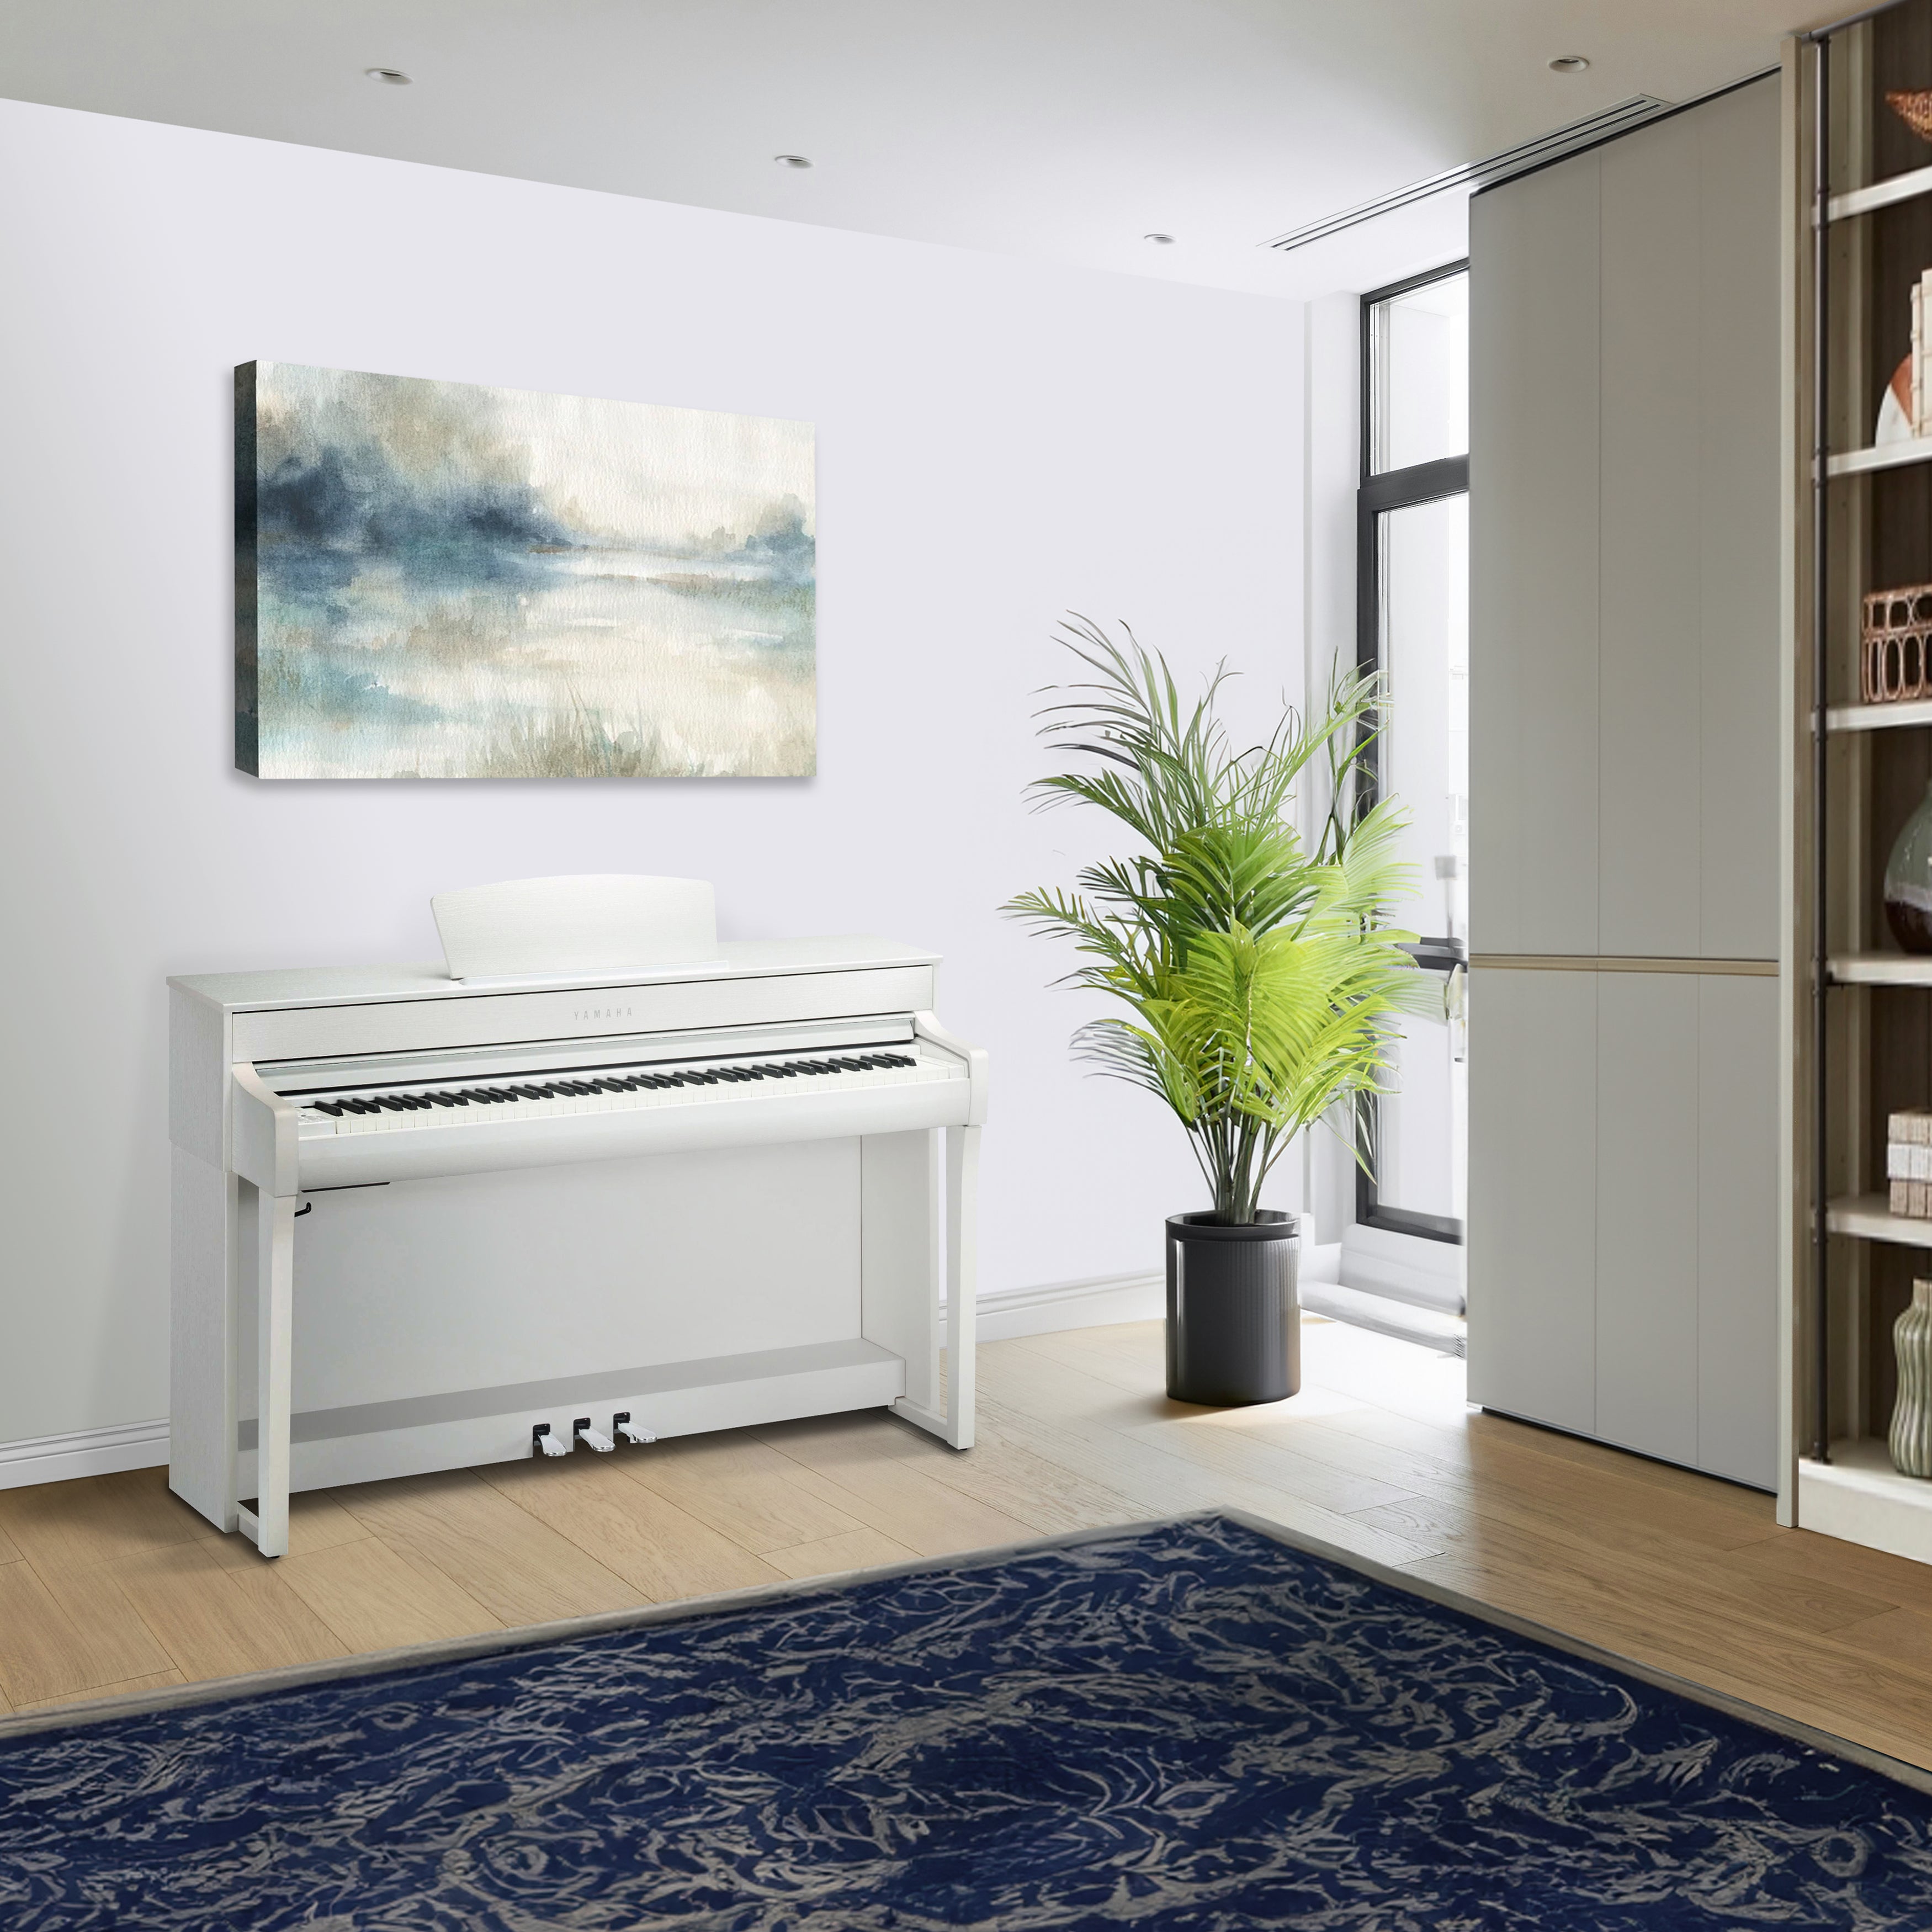 Yamaha Clavinova CLP-735 Digital Piano - Matte White - in a stylish room